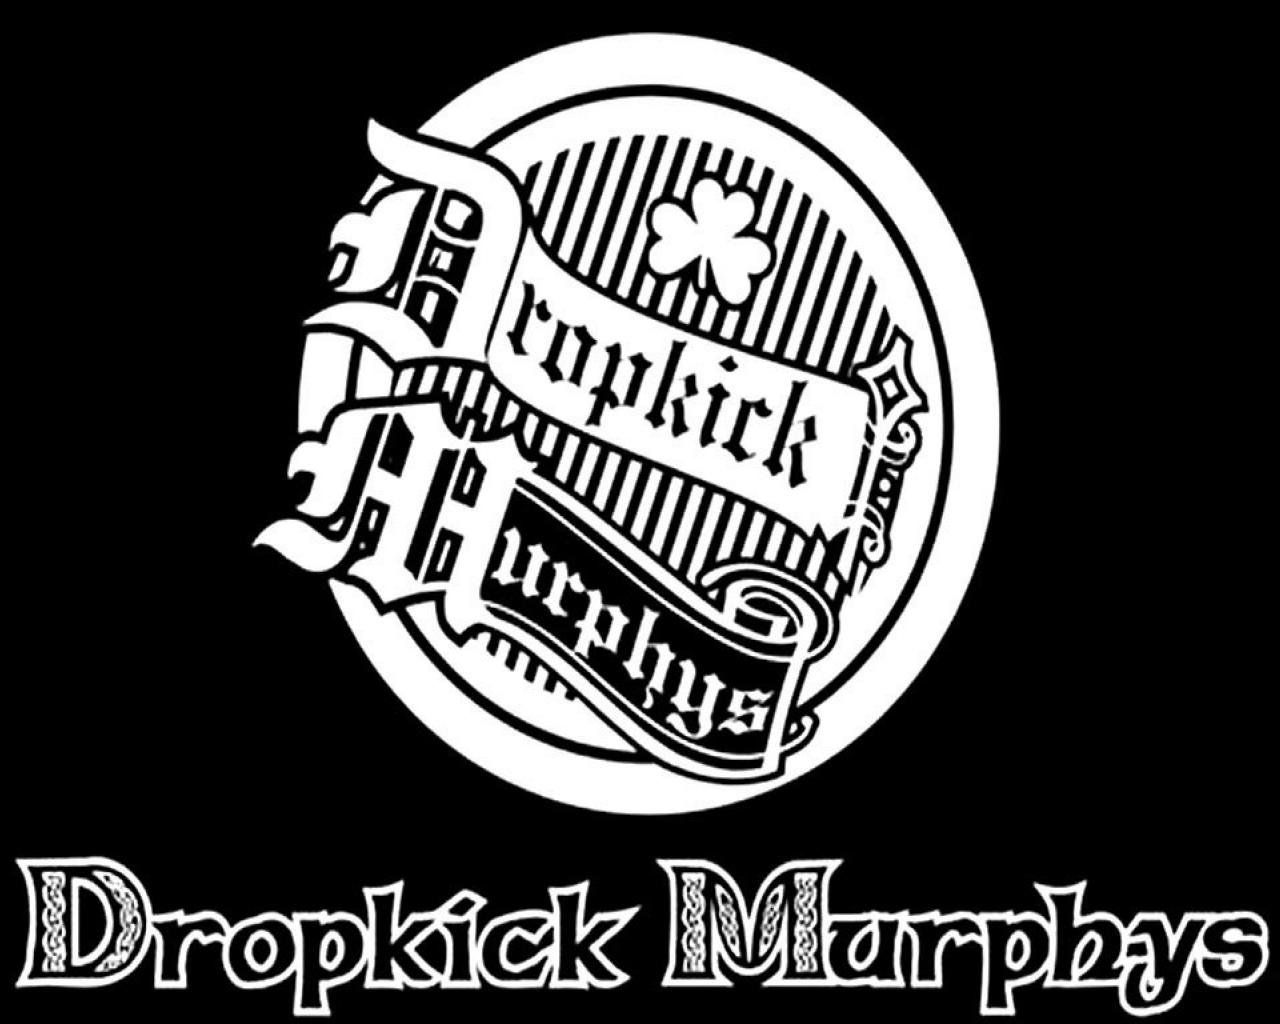 Dropkick Murphys Images Signed And Sealed In Blood - Dropkick Murphys , HD Wallpaper & Backgrounds